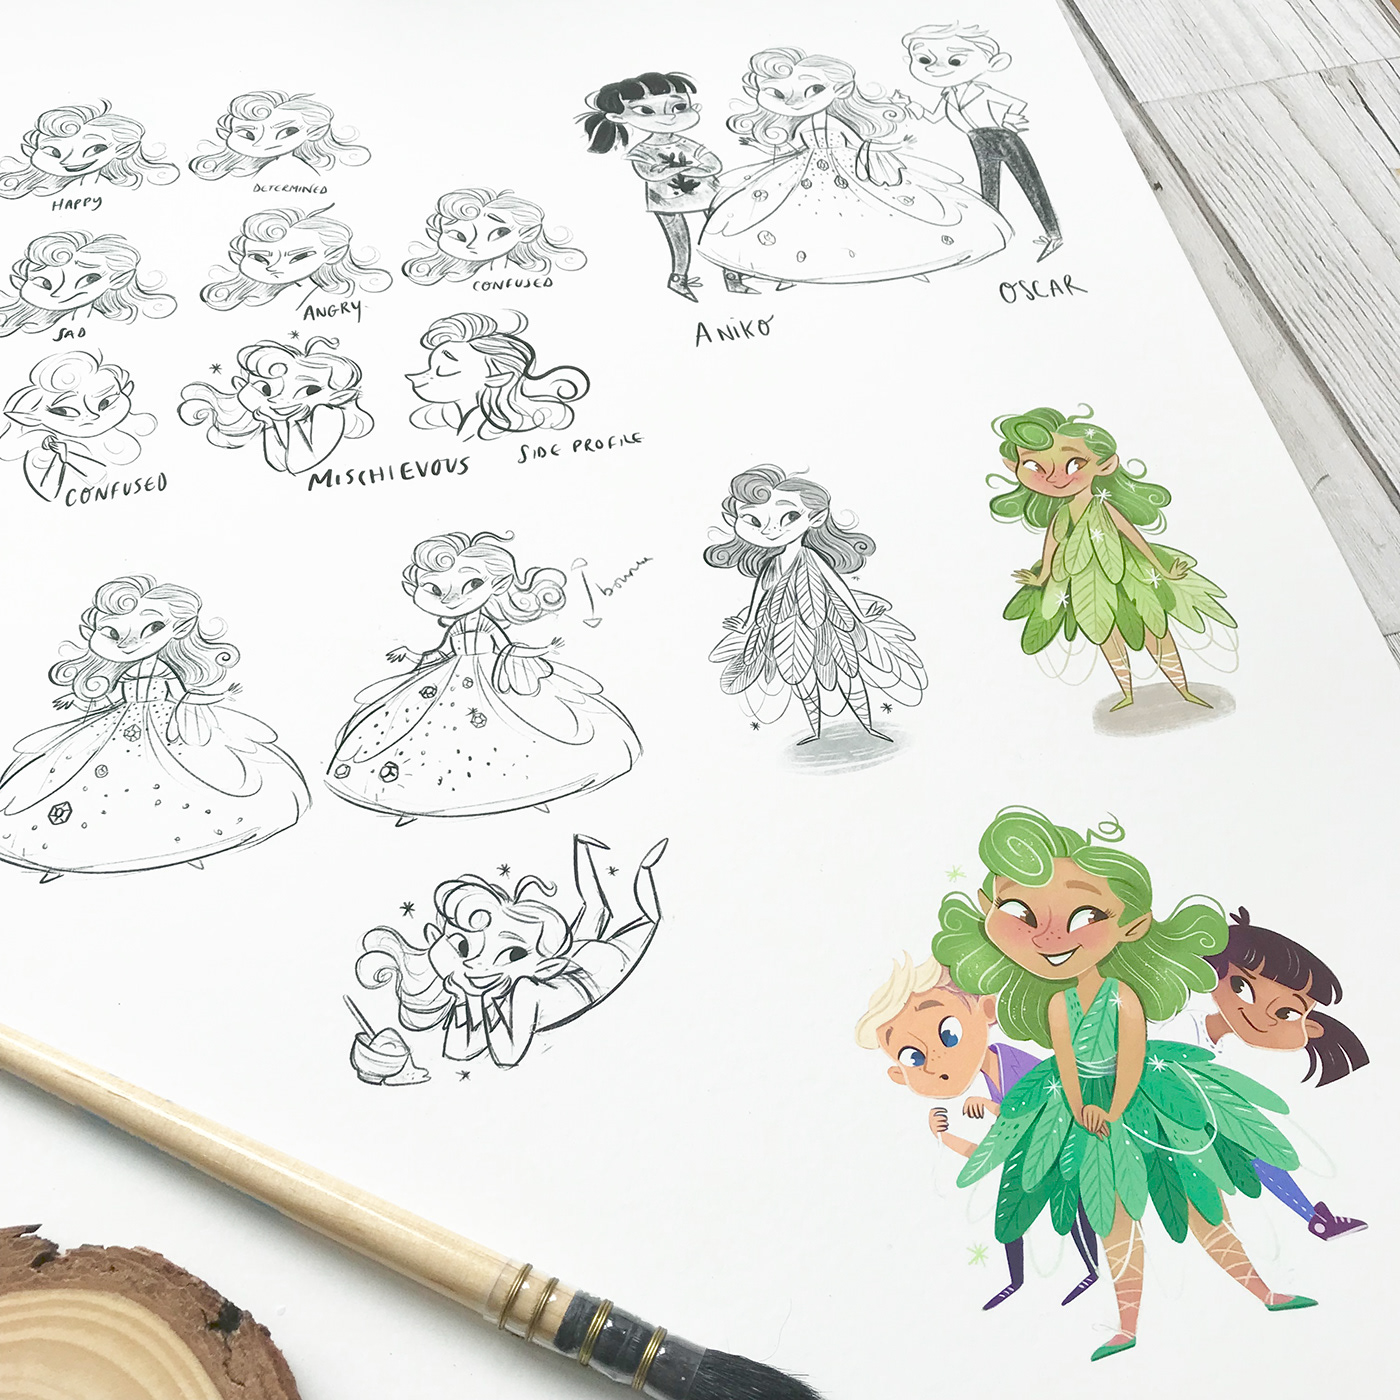 Character design  ILLUSTRATION  children’s book art character art fairy pixie pixie character published illustration